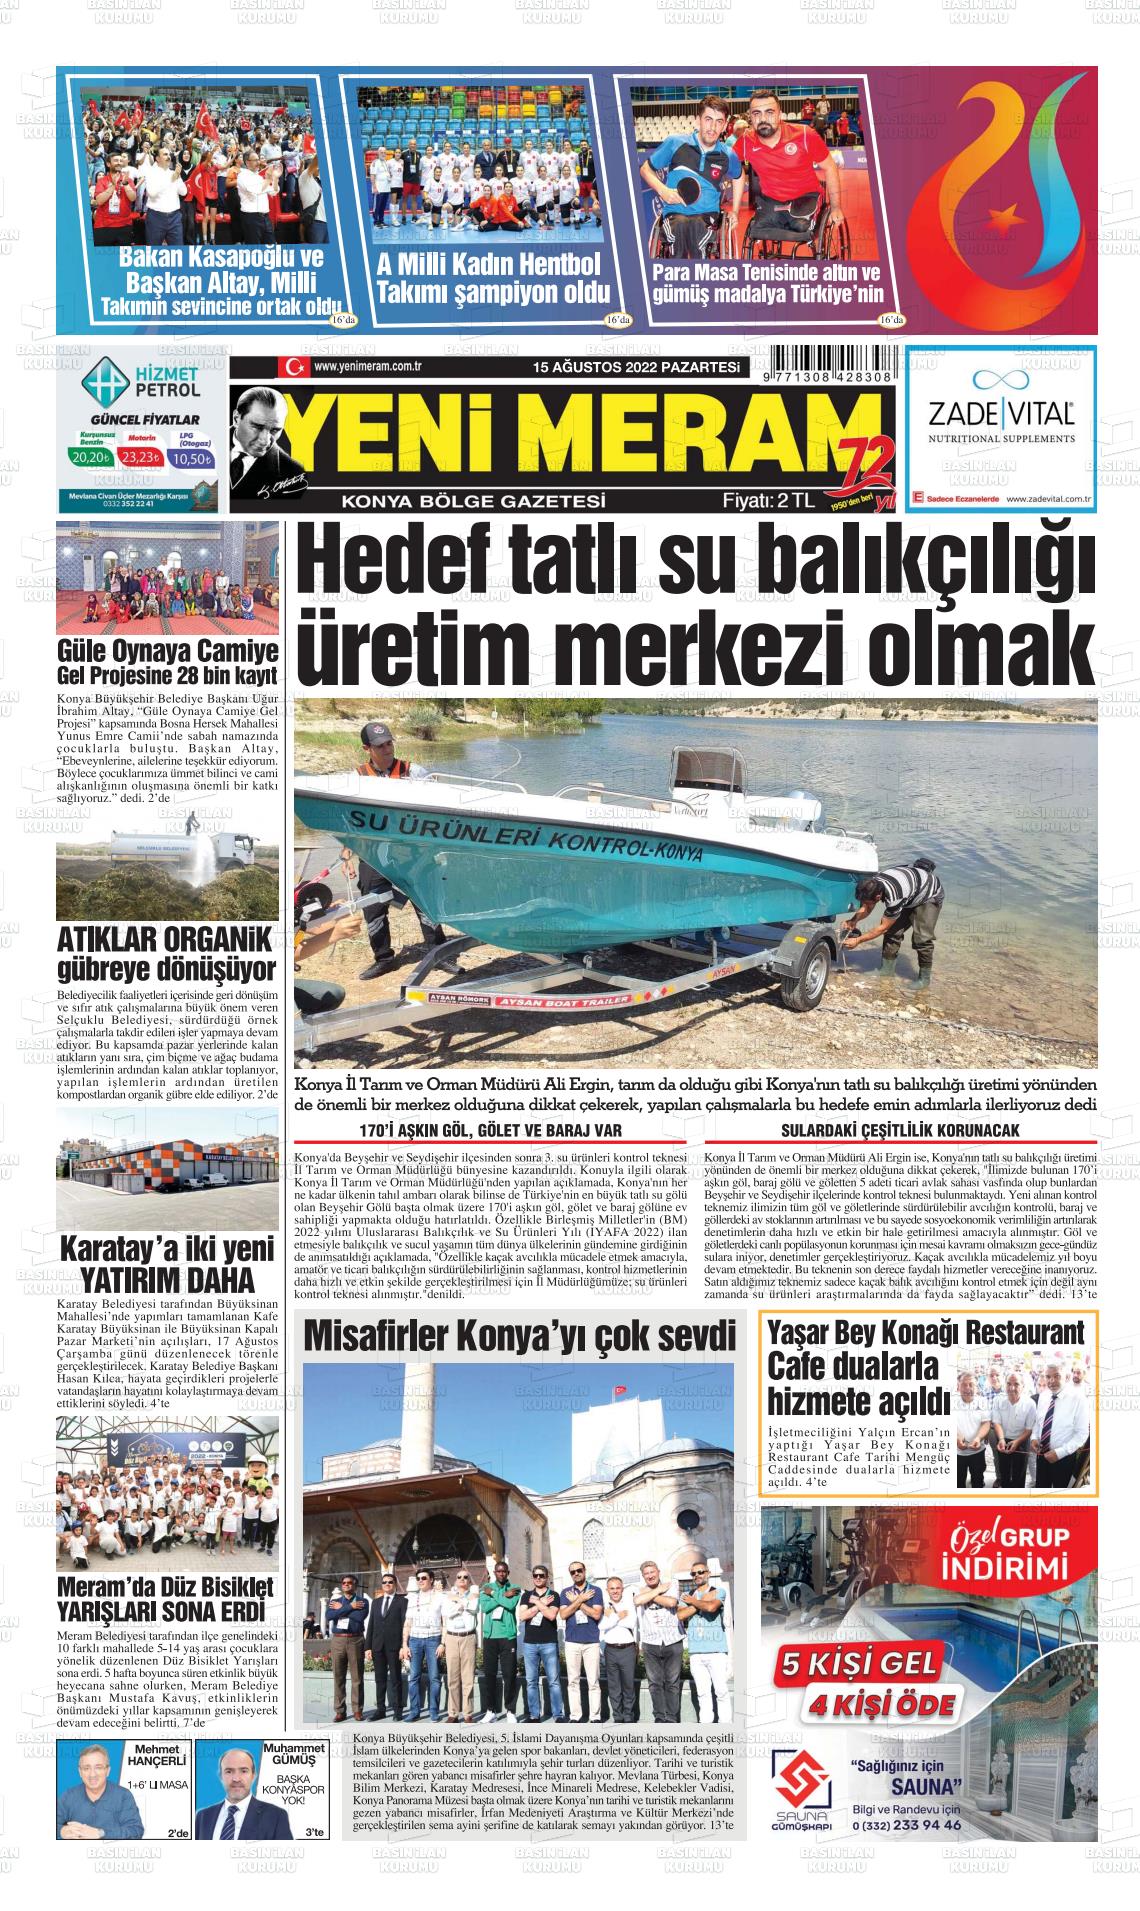 15 Ağustos 2022 Yeni Meram Gazete Manşeti